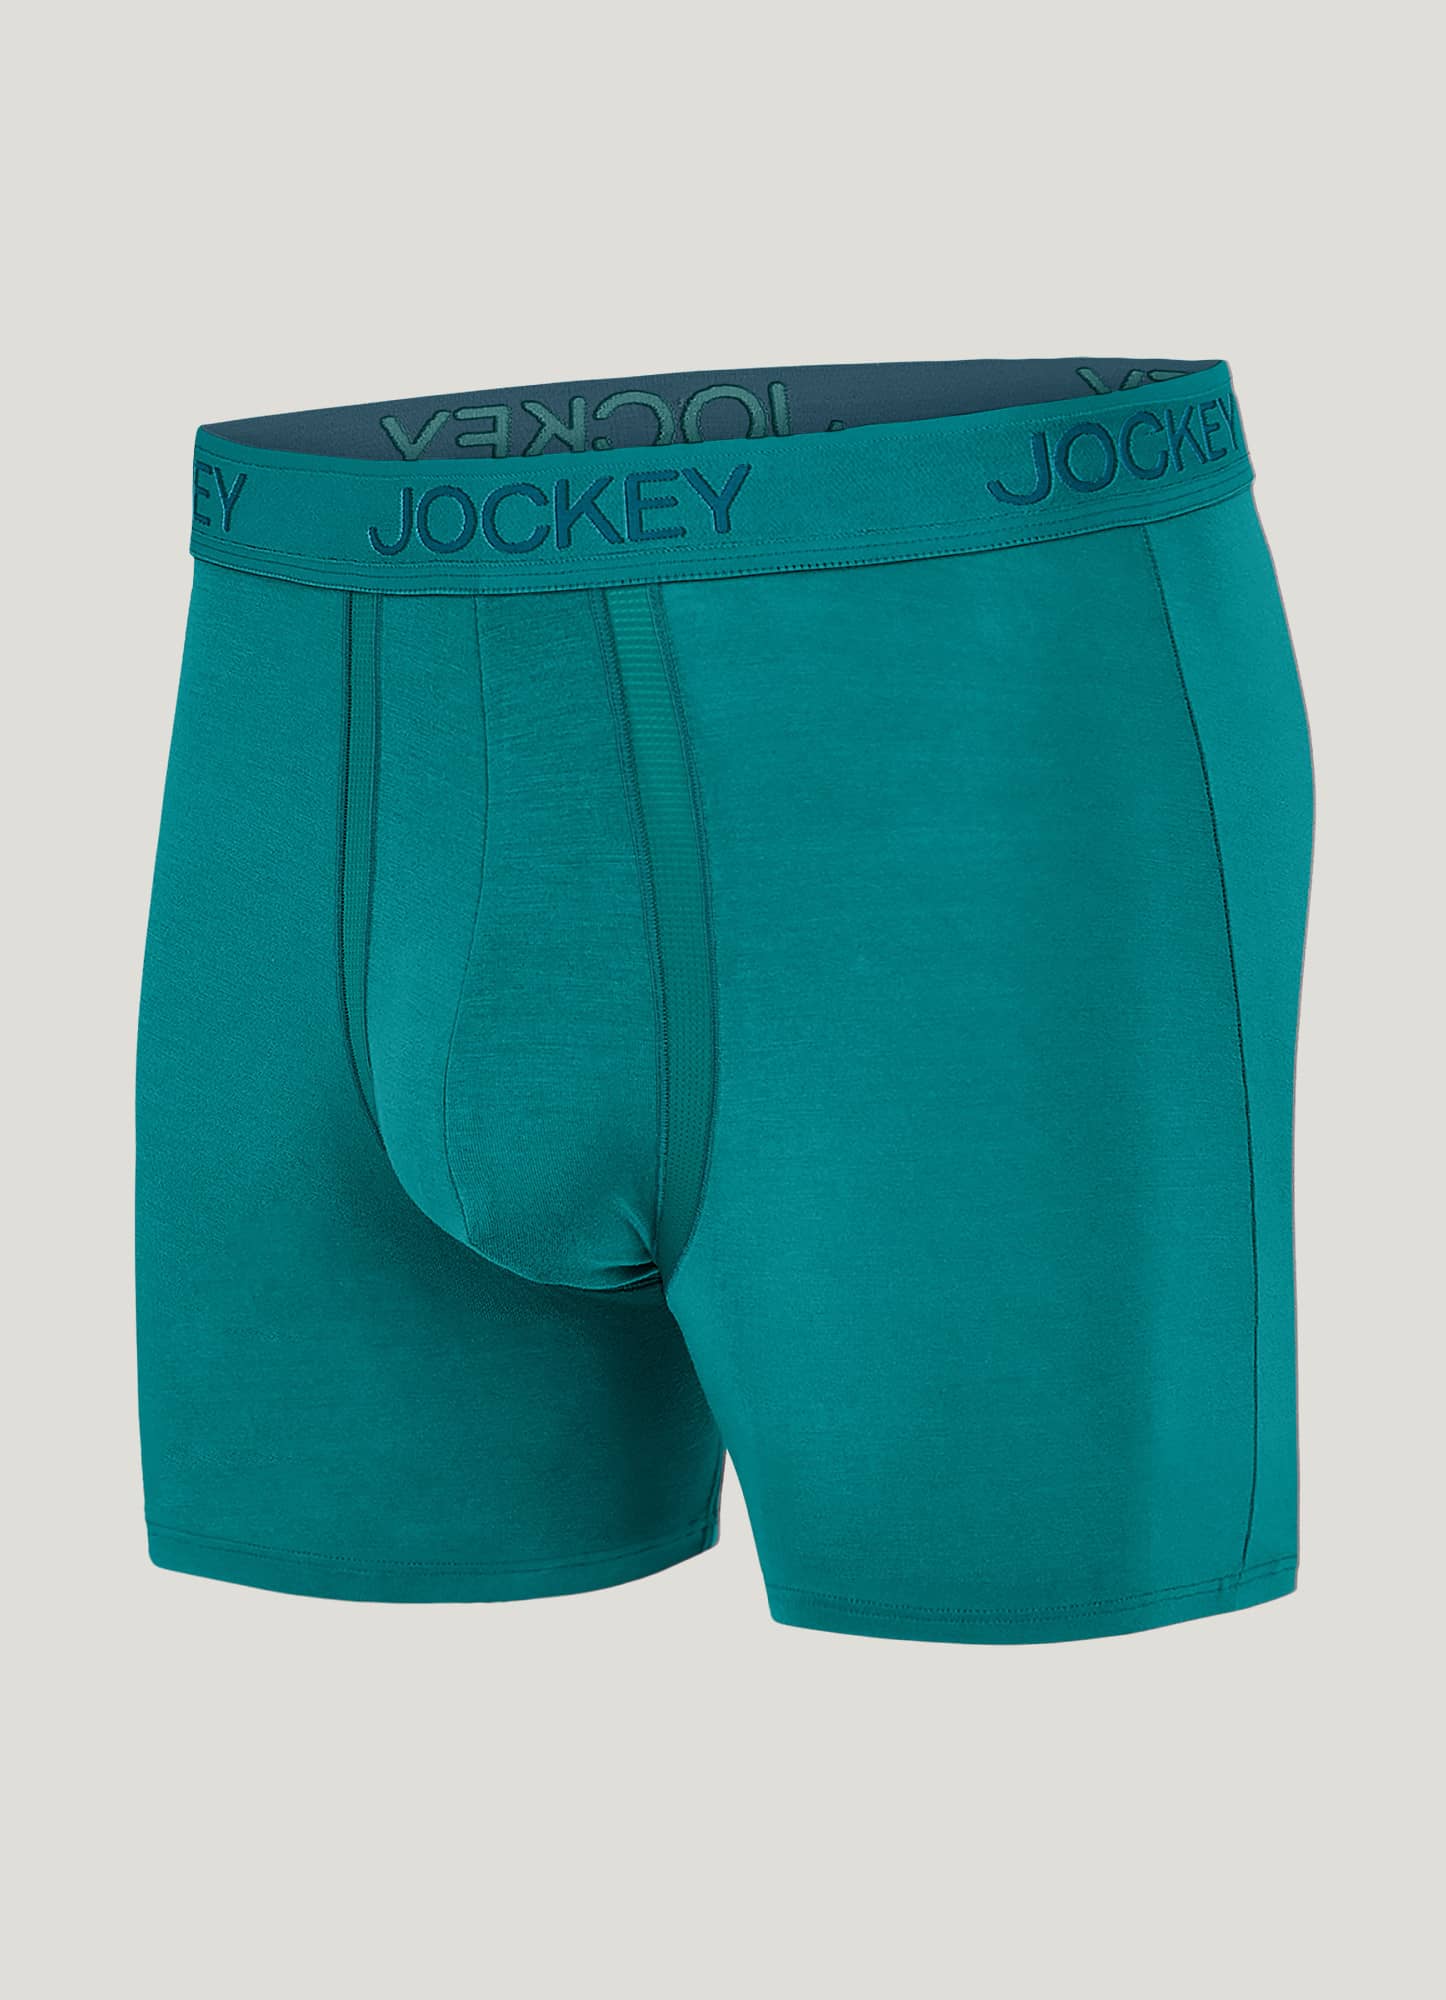 Men's Ultra Soft Mesh Quick Dry Performance Sports Underwear